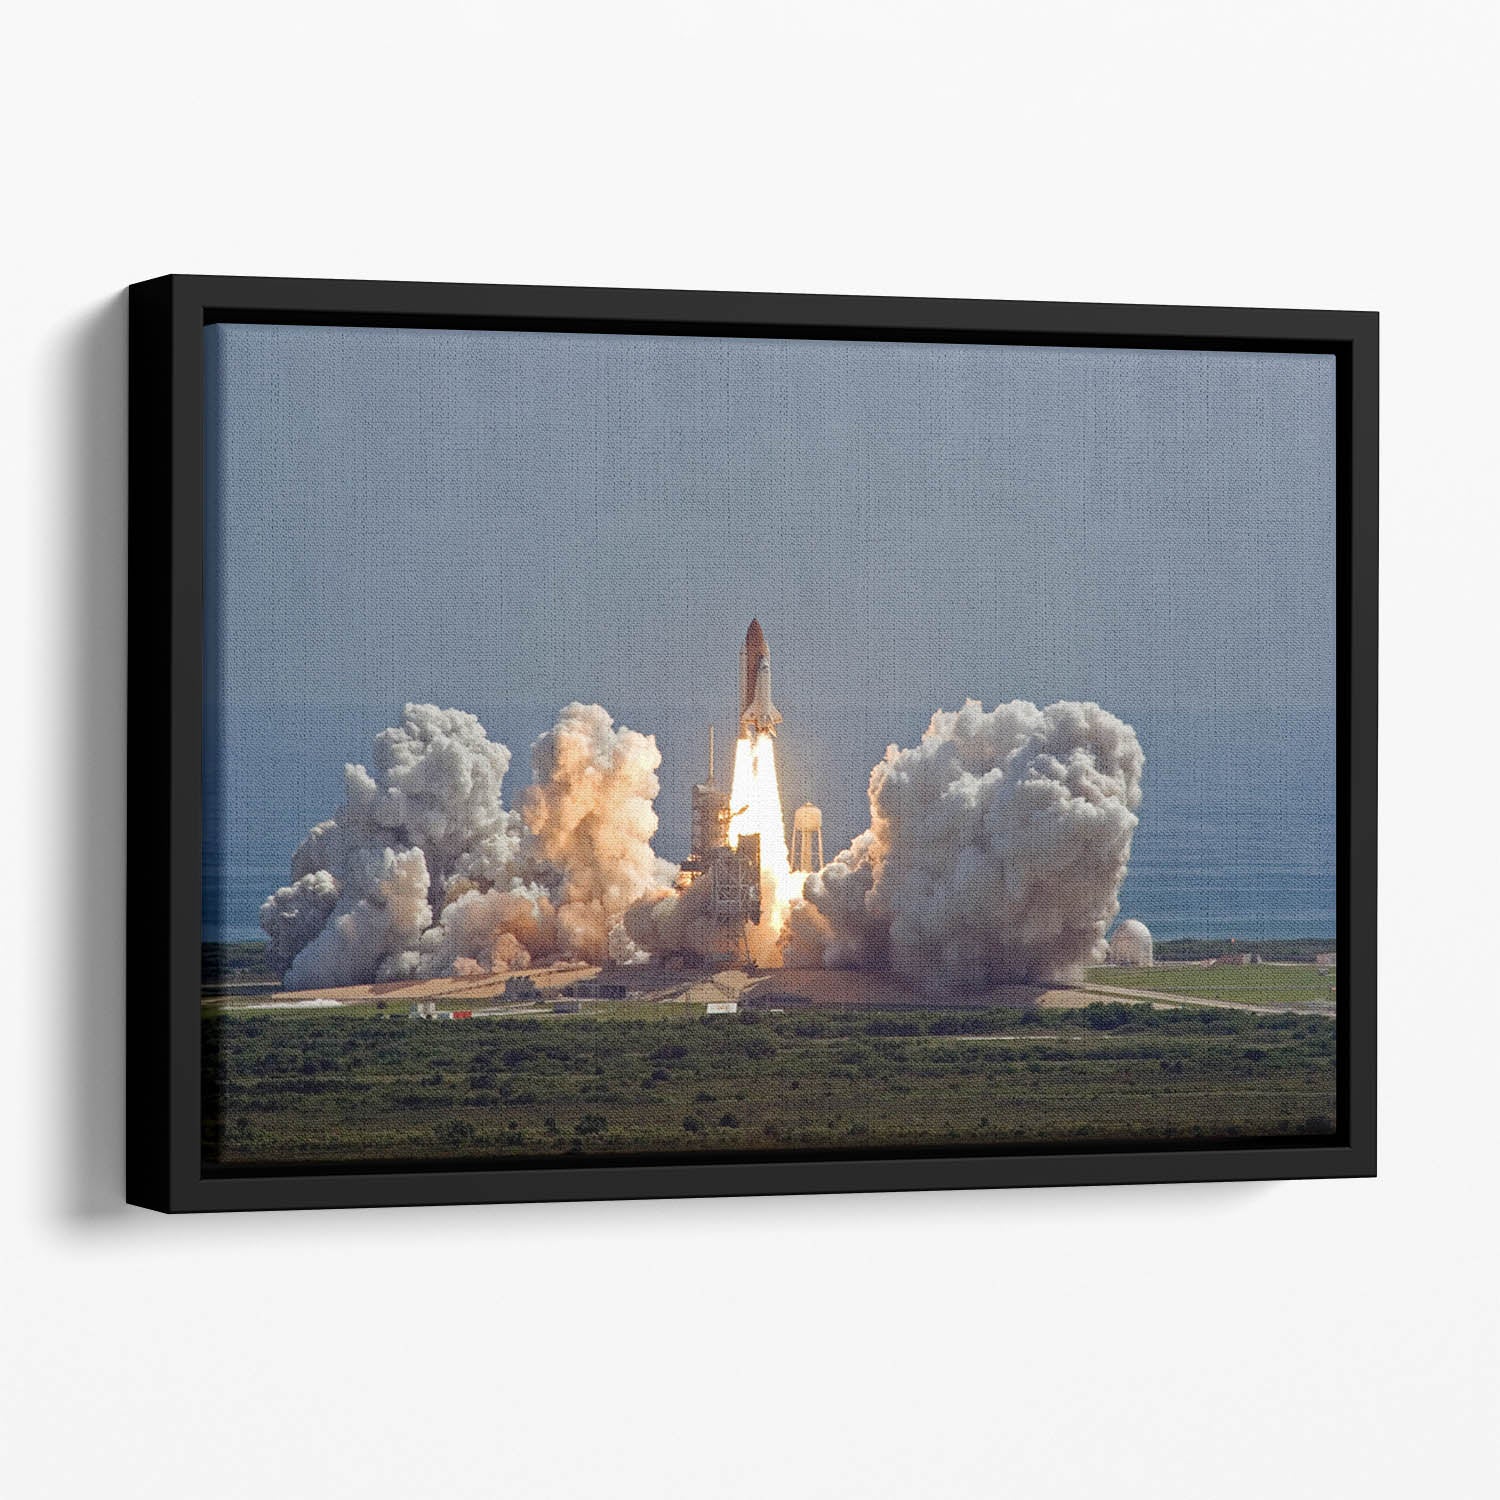 Shuttle Endeavour Launch Floating Framed Canvas